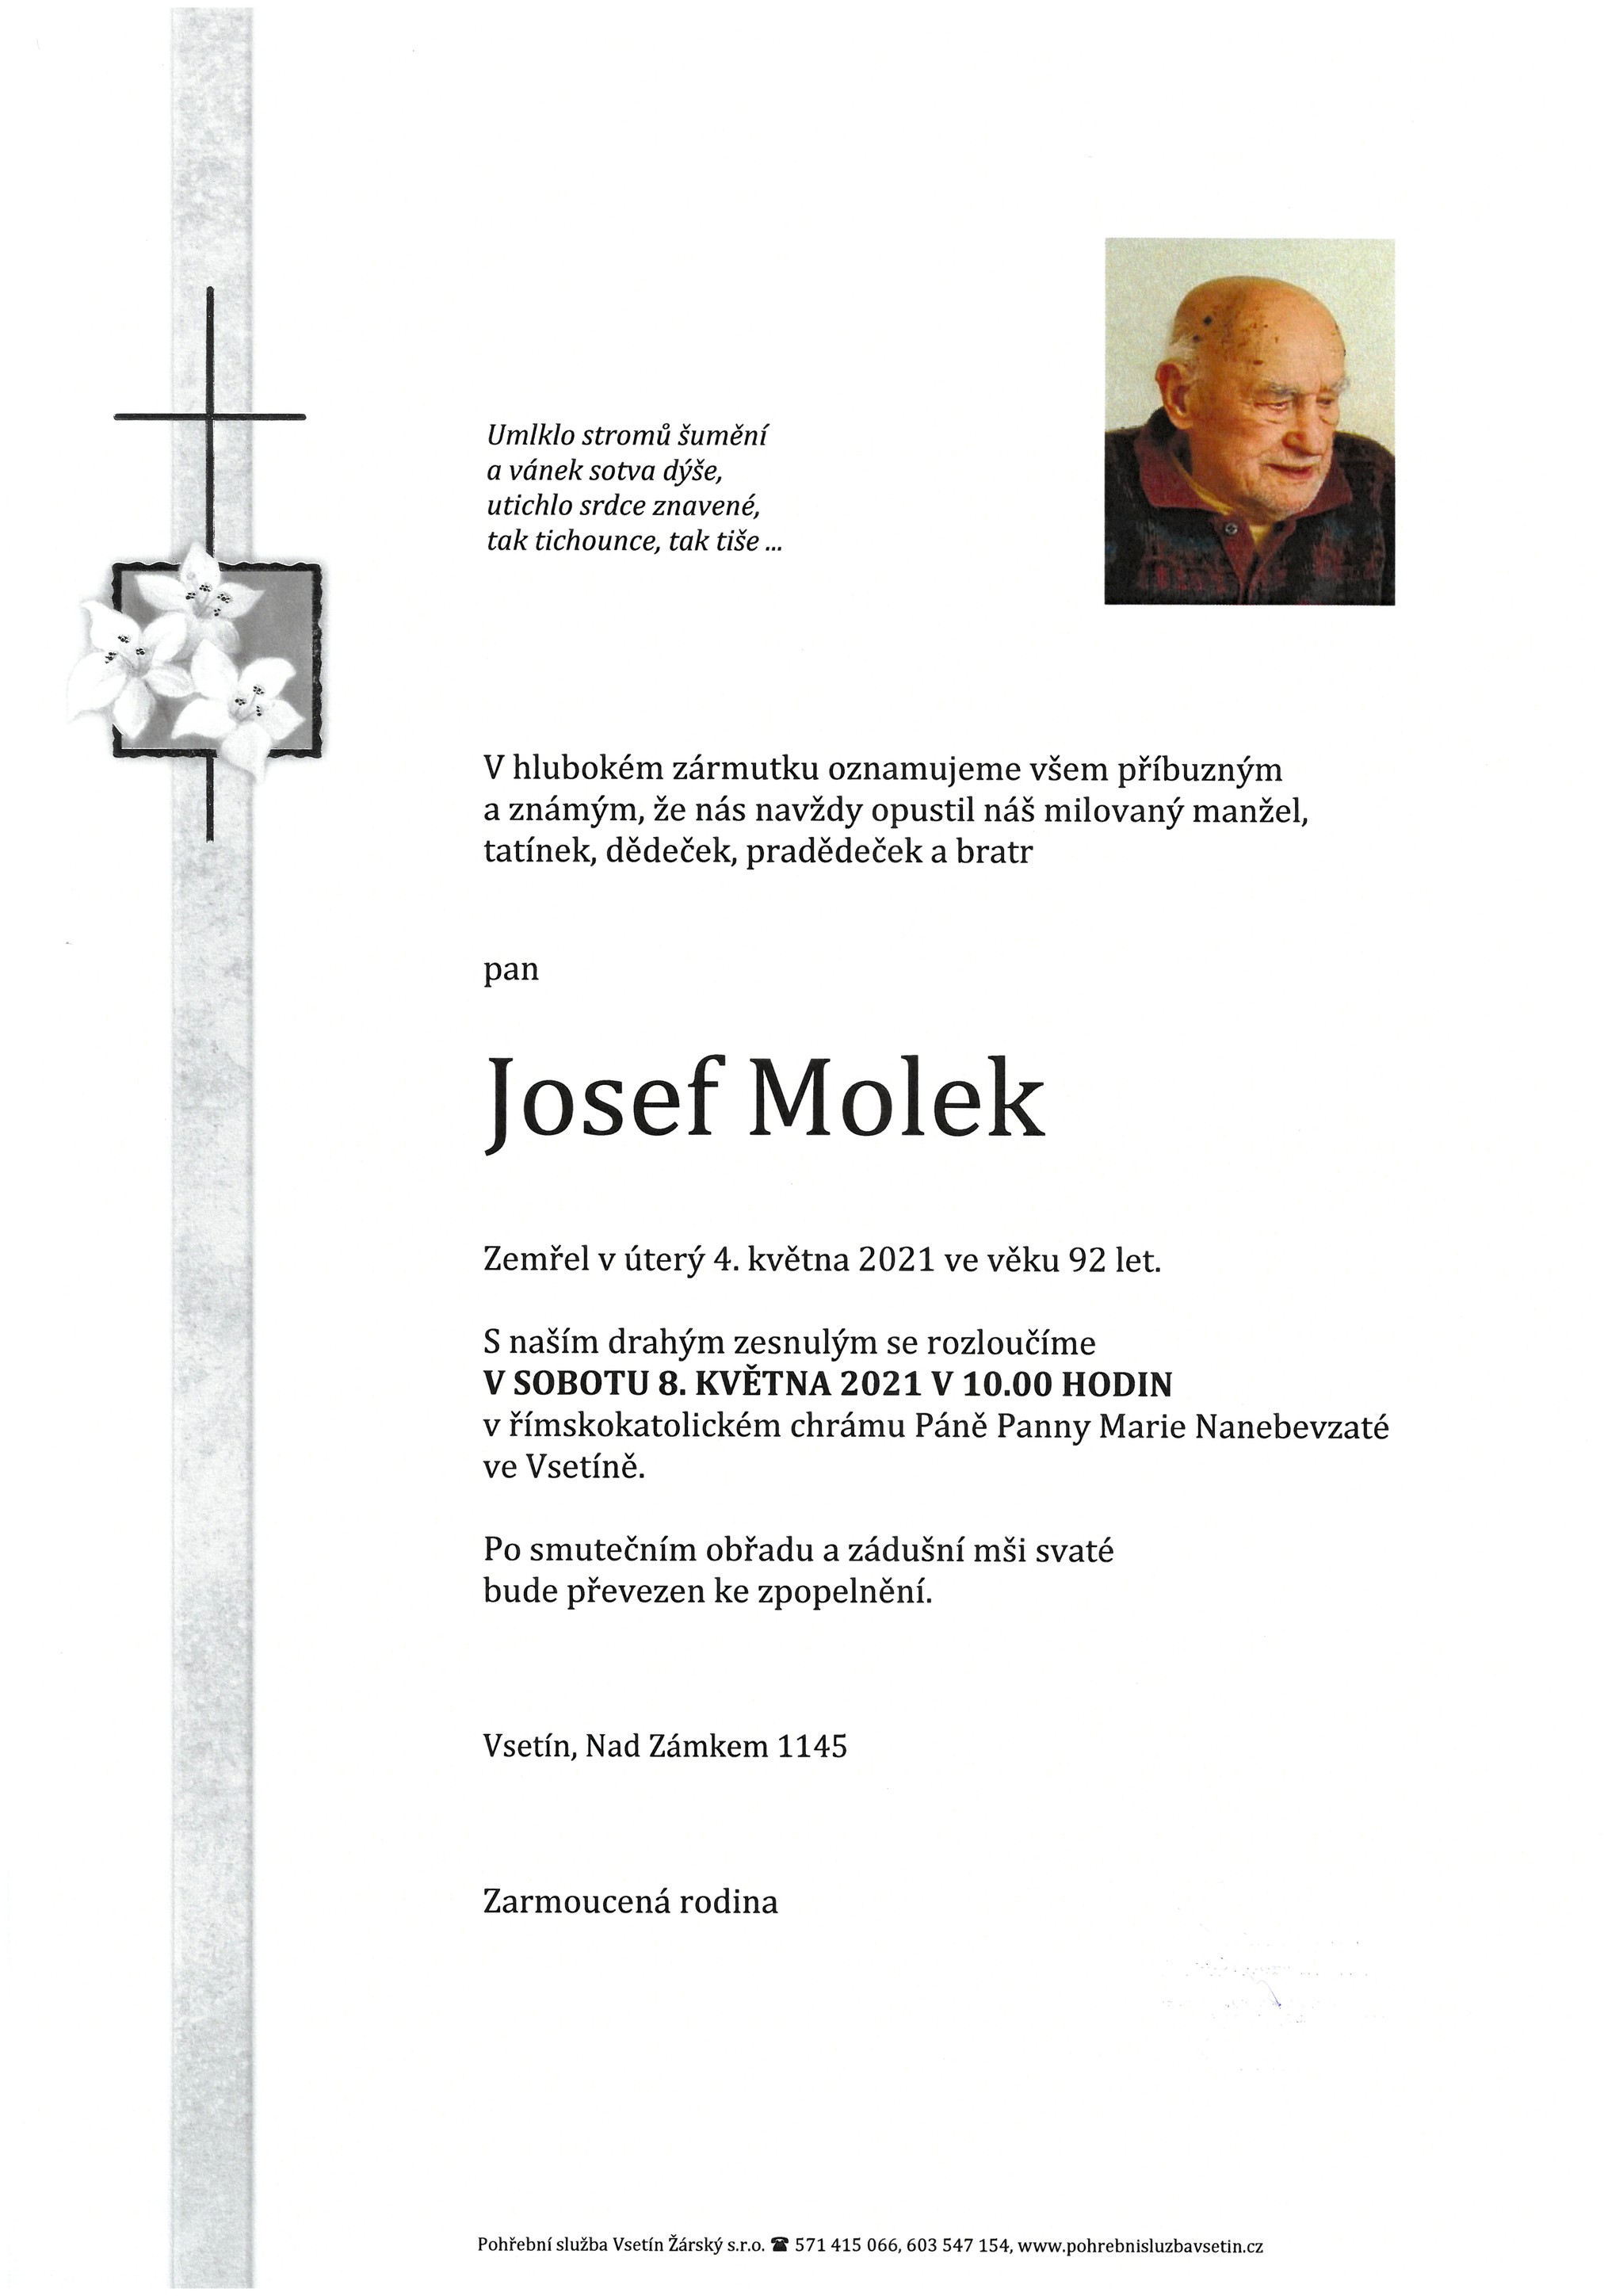 Josef Molek